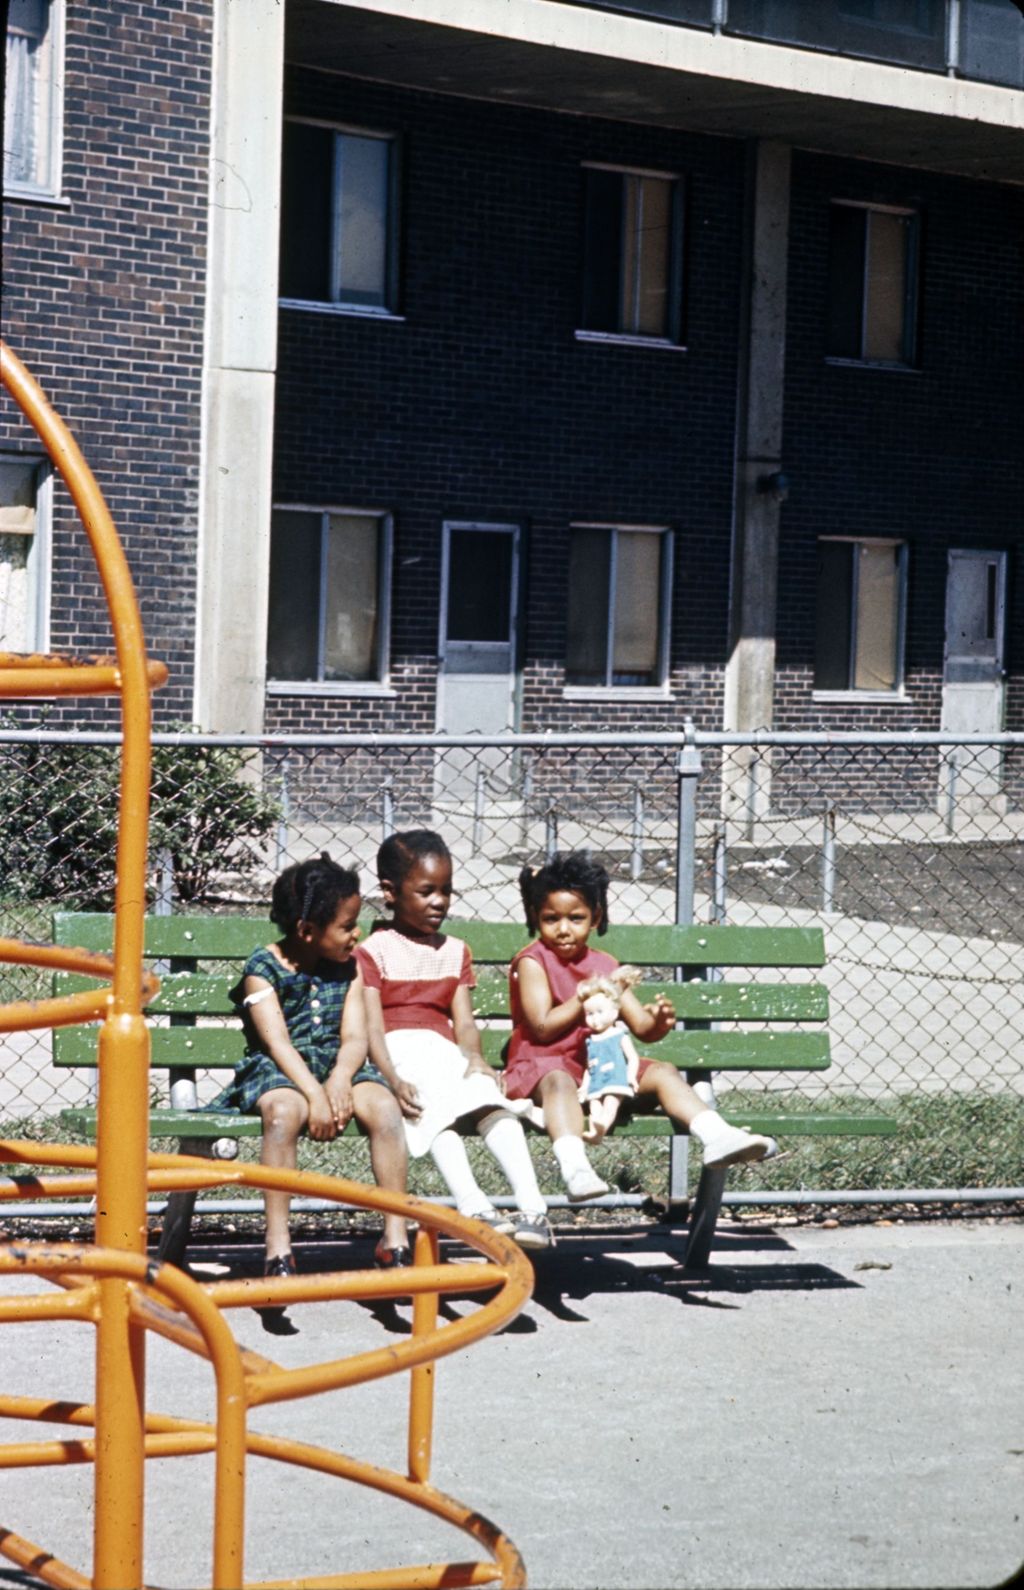 Children in playground next to apartment building